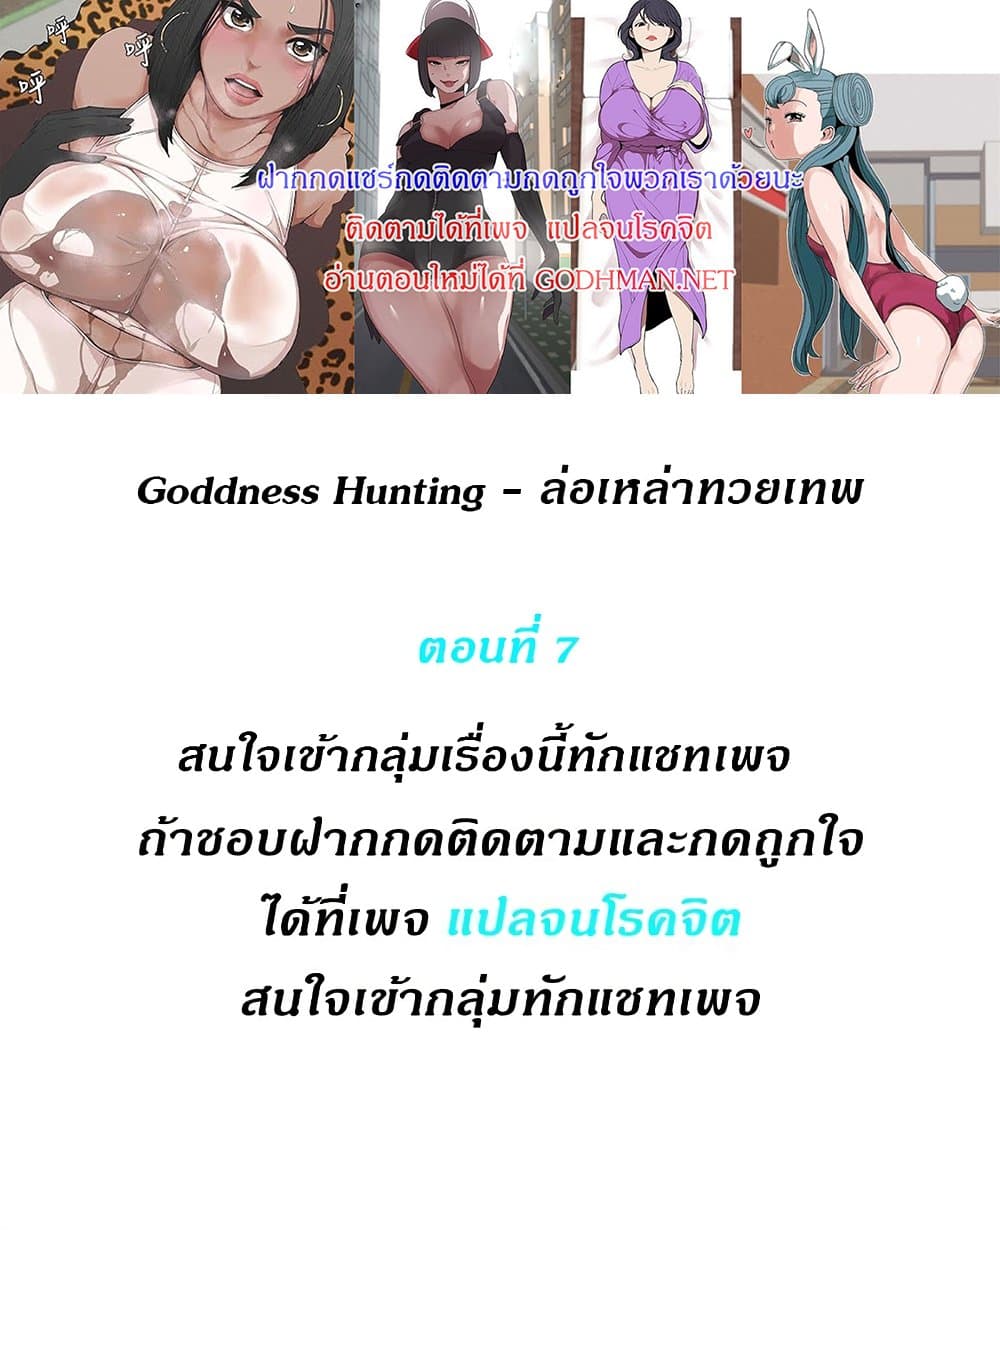 Goddess Hunting 7 1